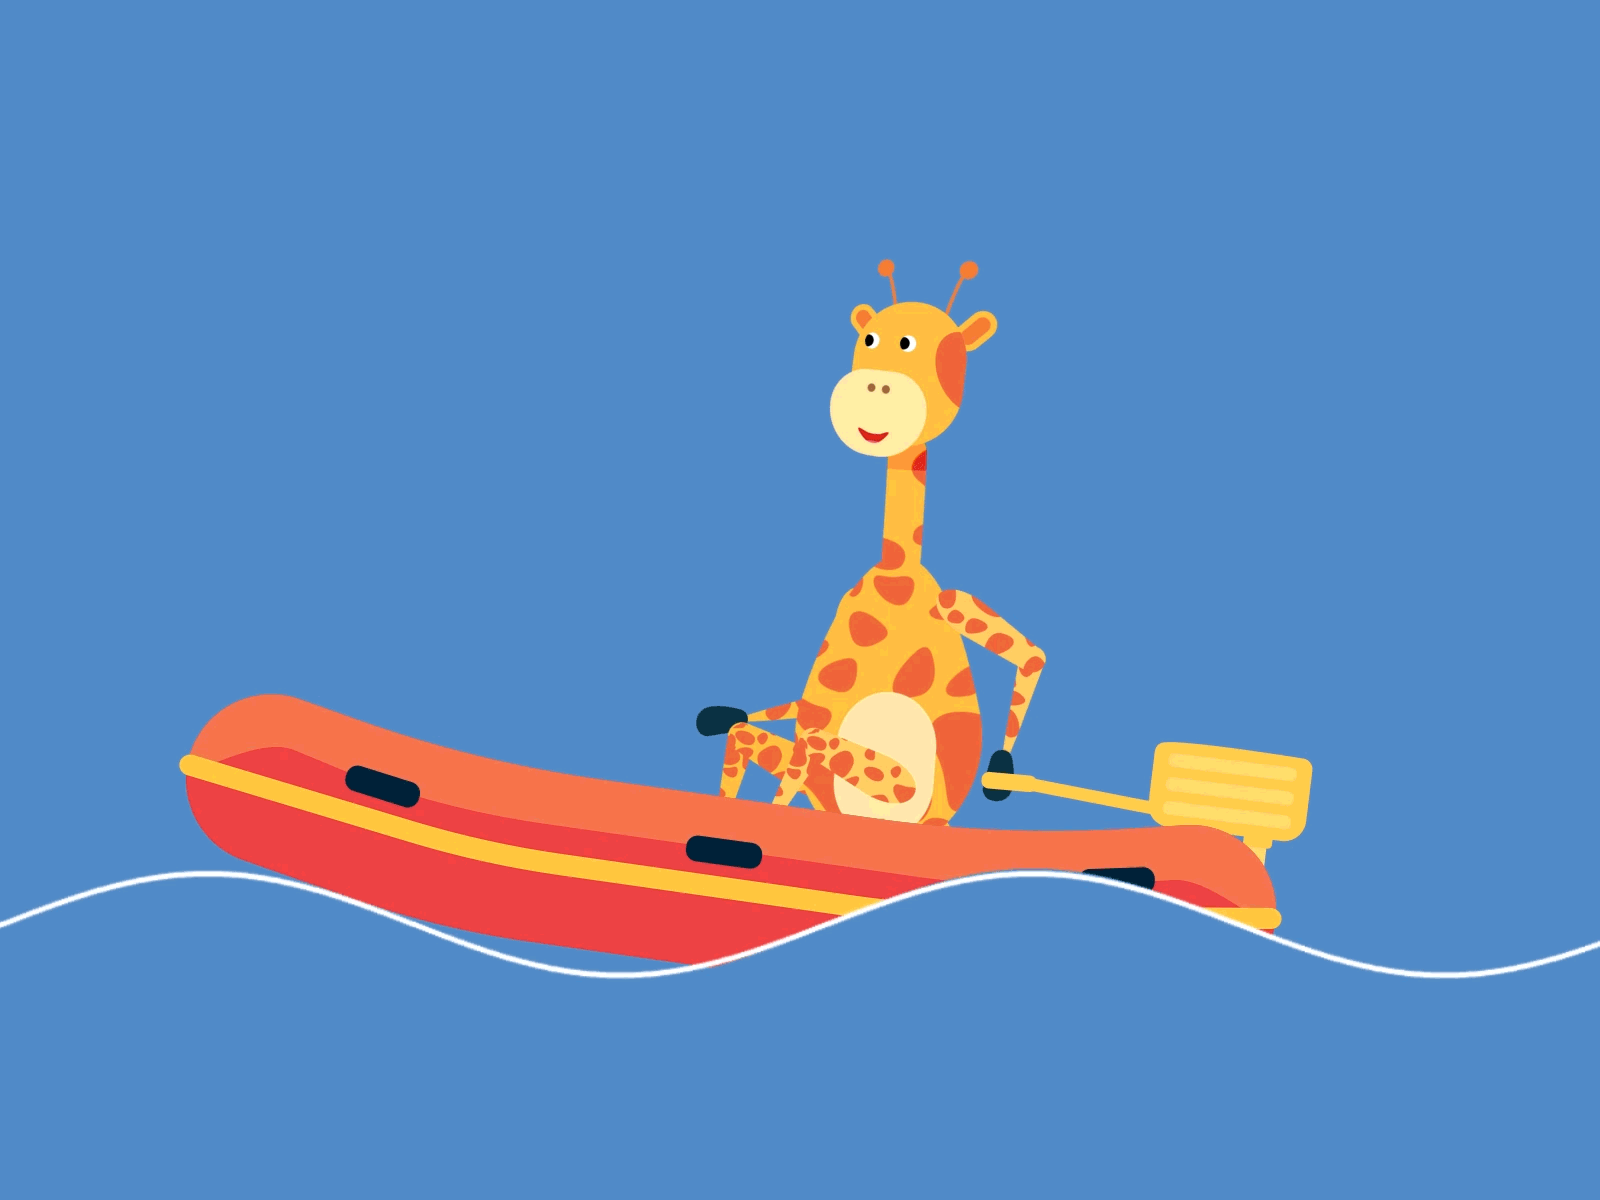 Cute Animal Giraffe on Dingi Boat Animation - After Effects